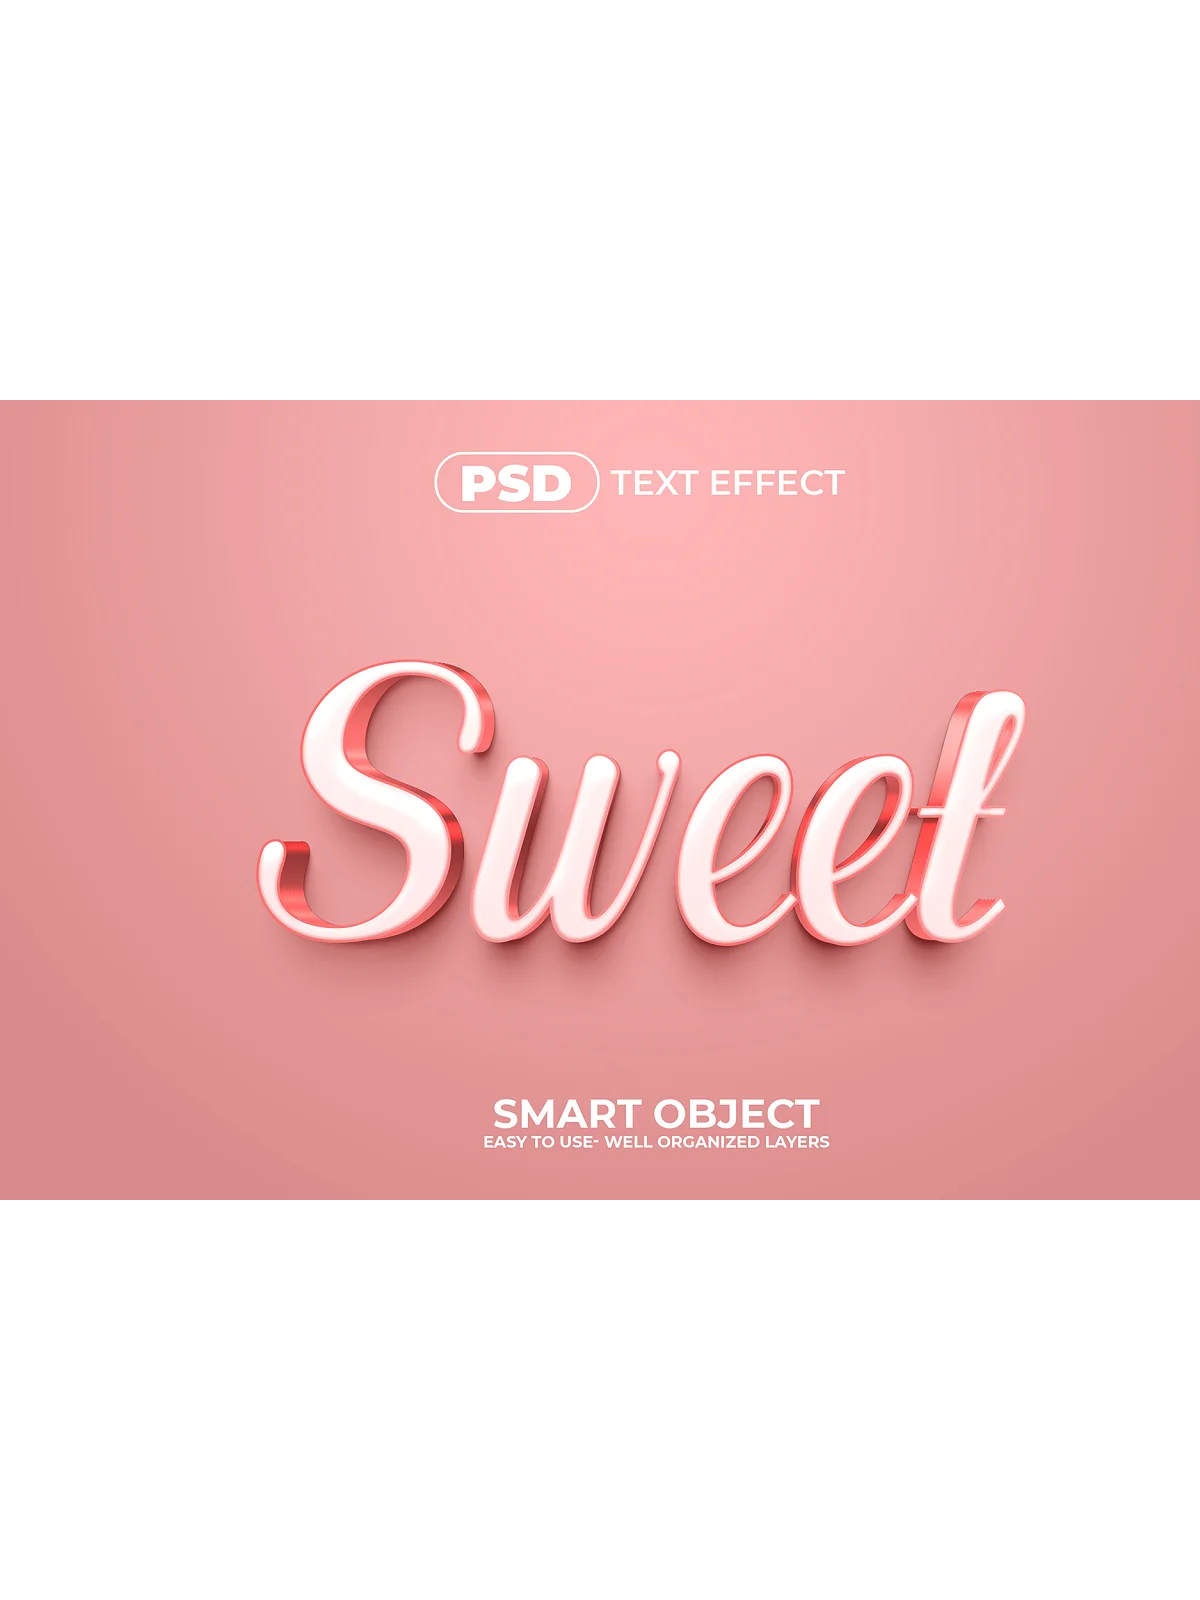 Sweet 3d editable text effect style pinterest image.